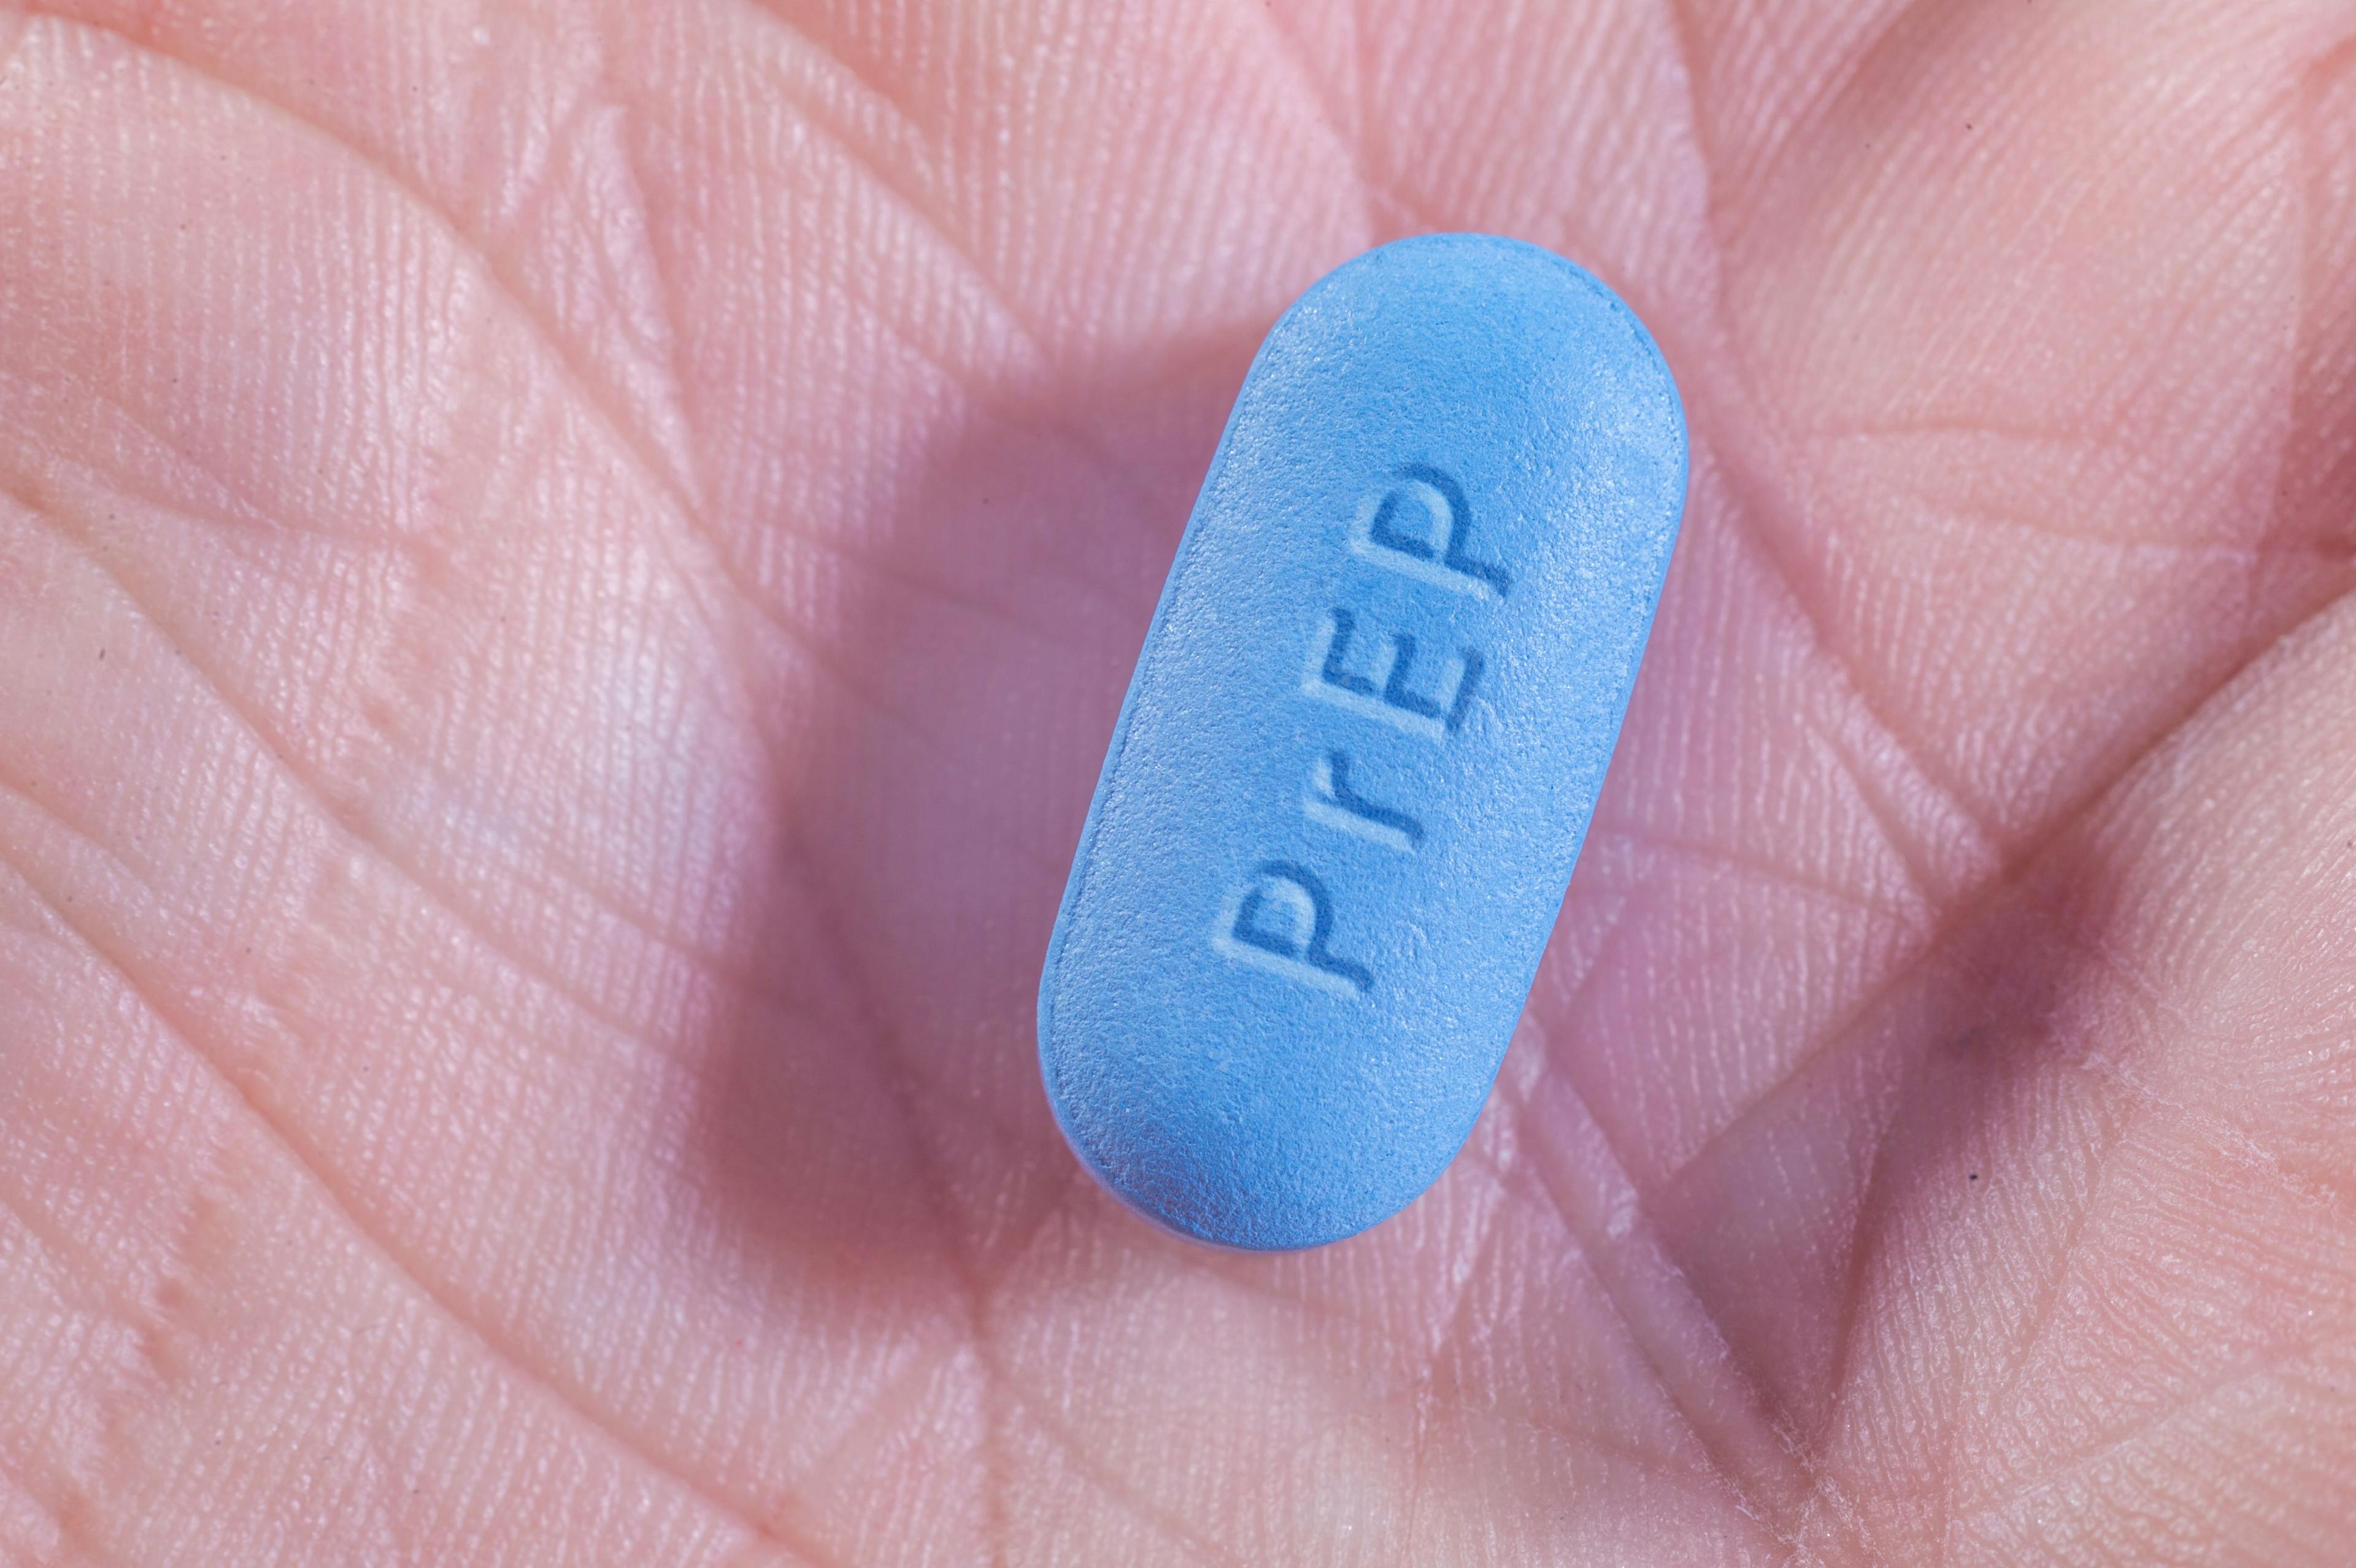 HIV PrEP pill in hand